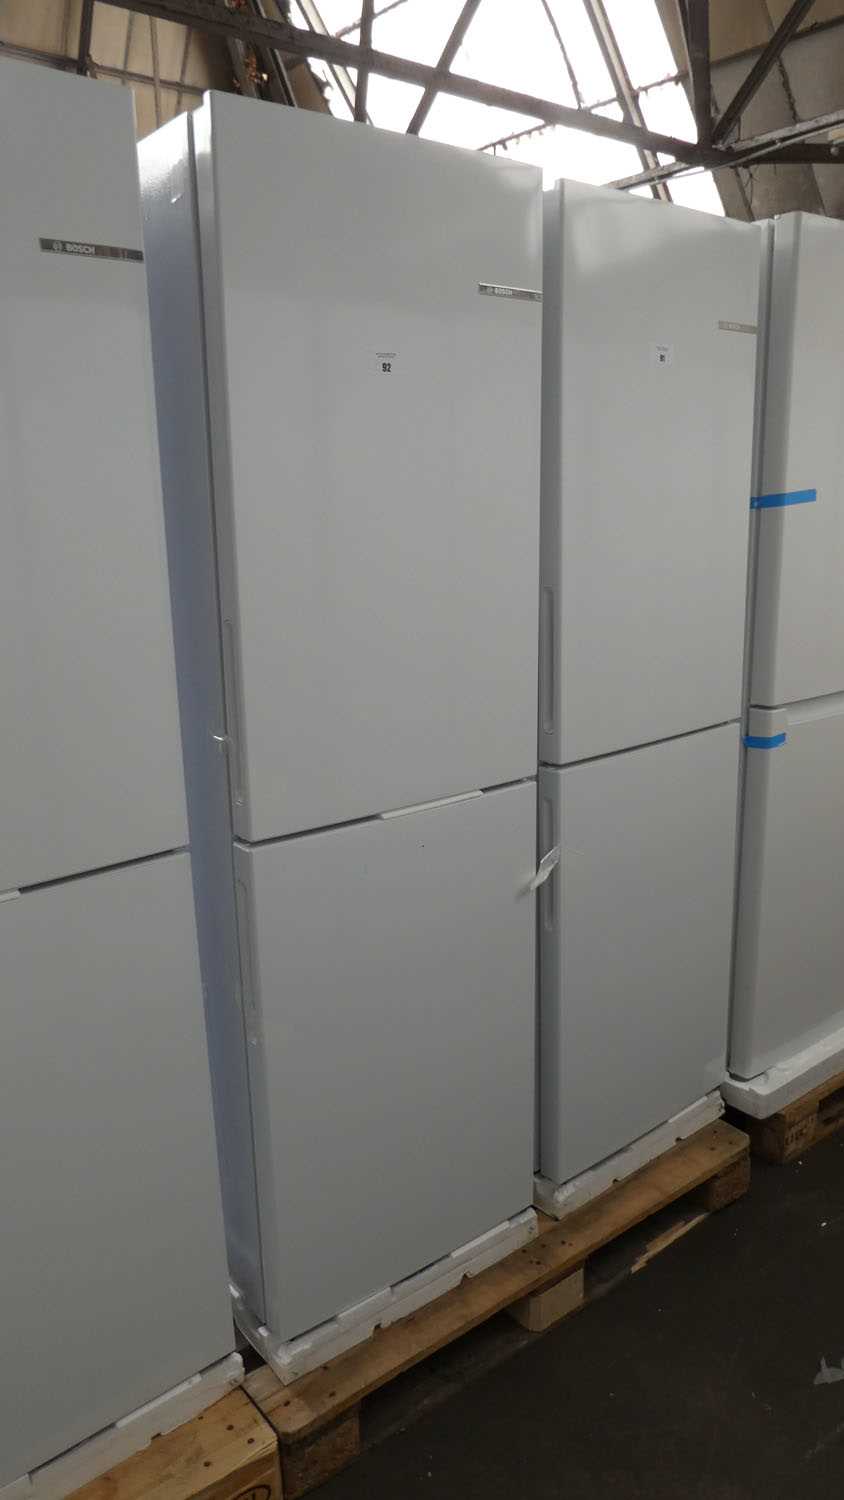 Lot 92 - KGN27NWFAGB Bosch Free-standing fridge-freezer